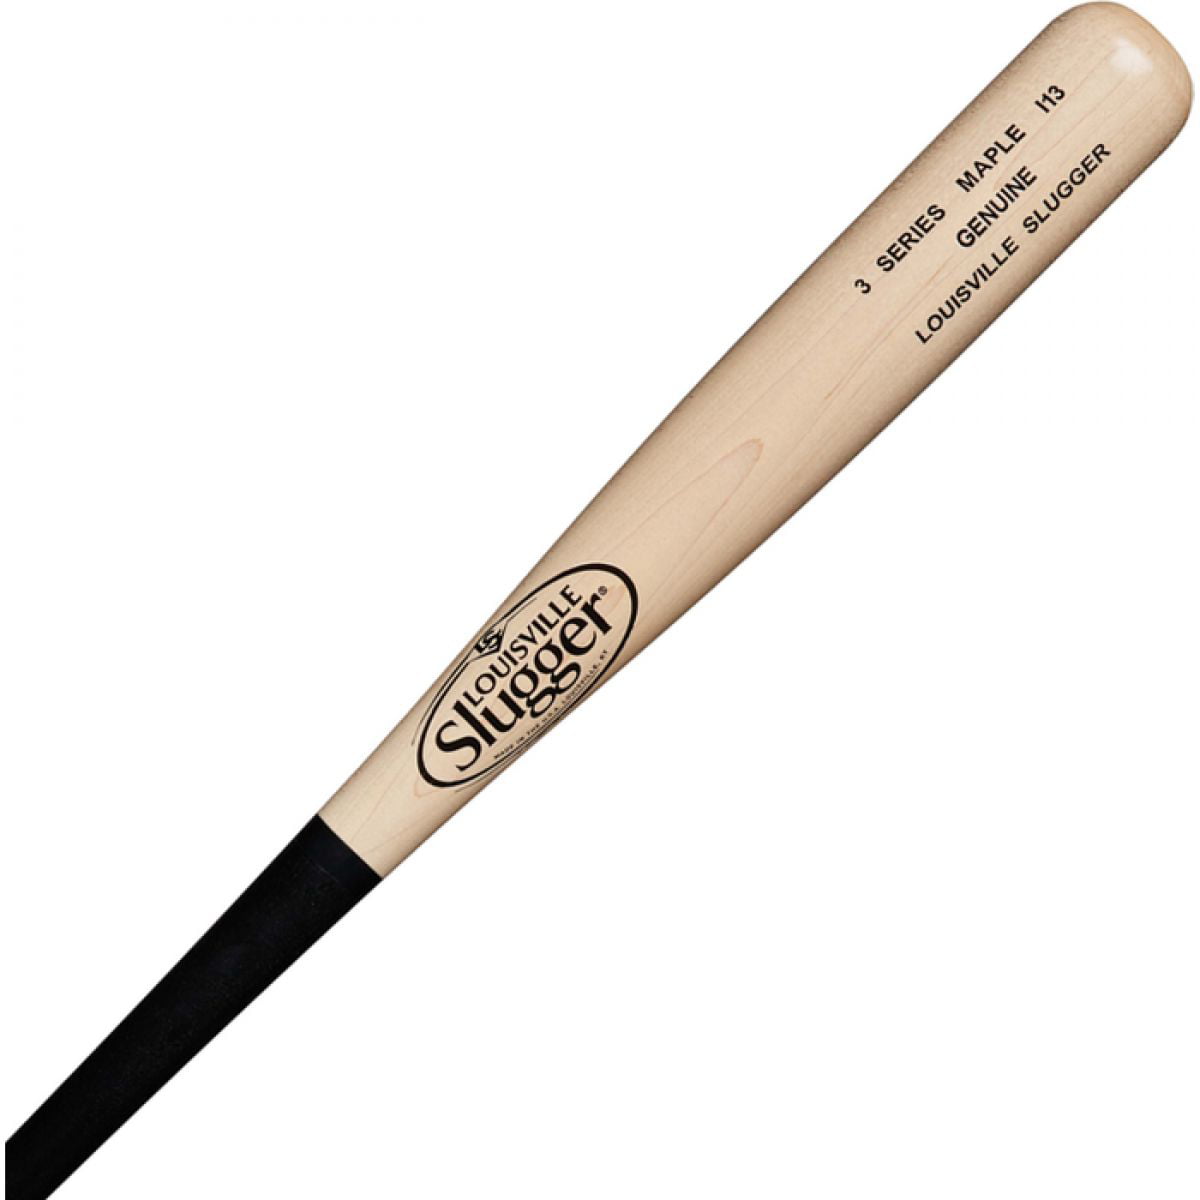 Louisville Slugger I13 Select S7 Maple Baseball Bat Natural/Unfinished 33